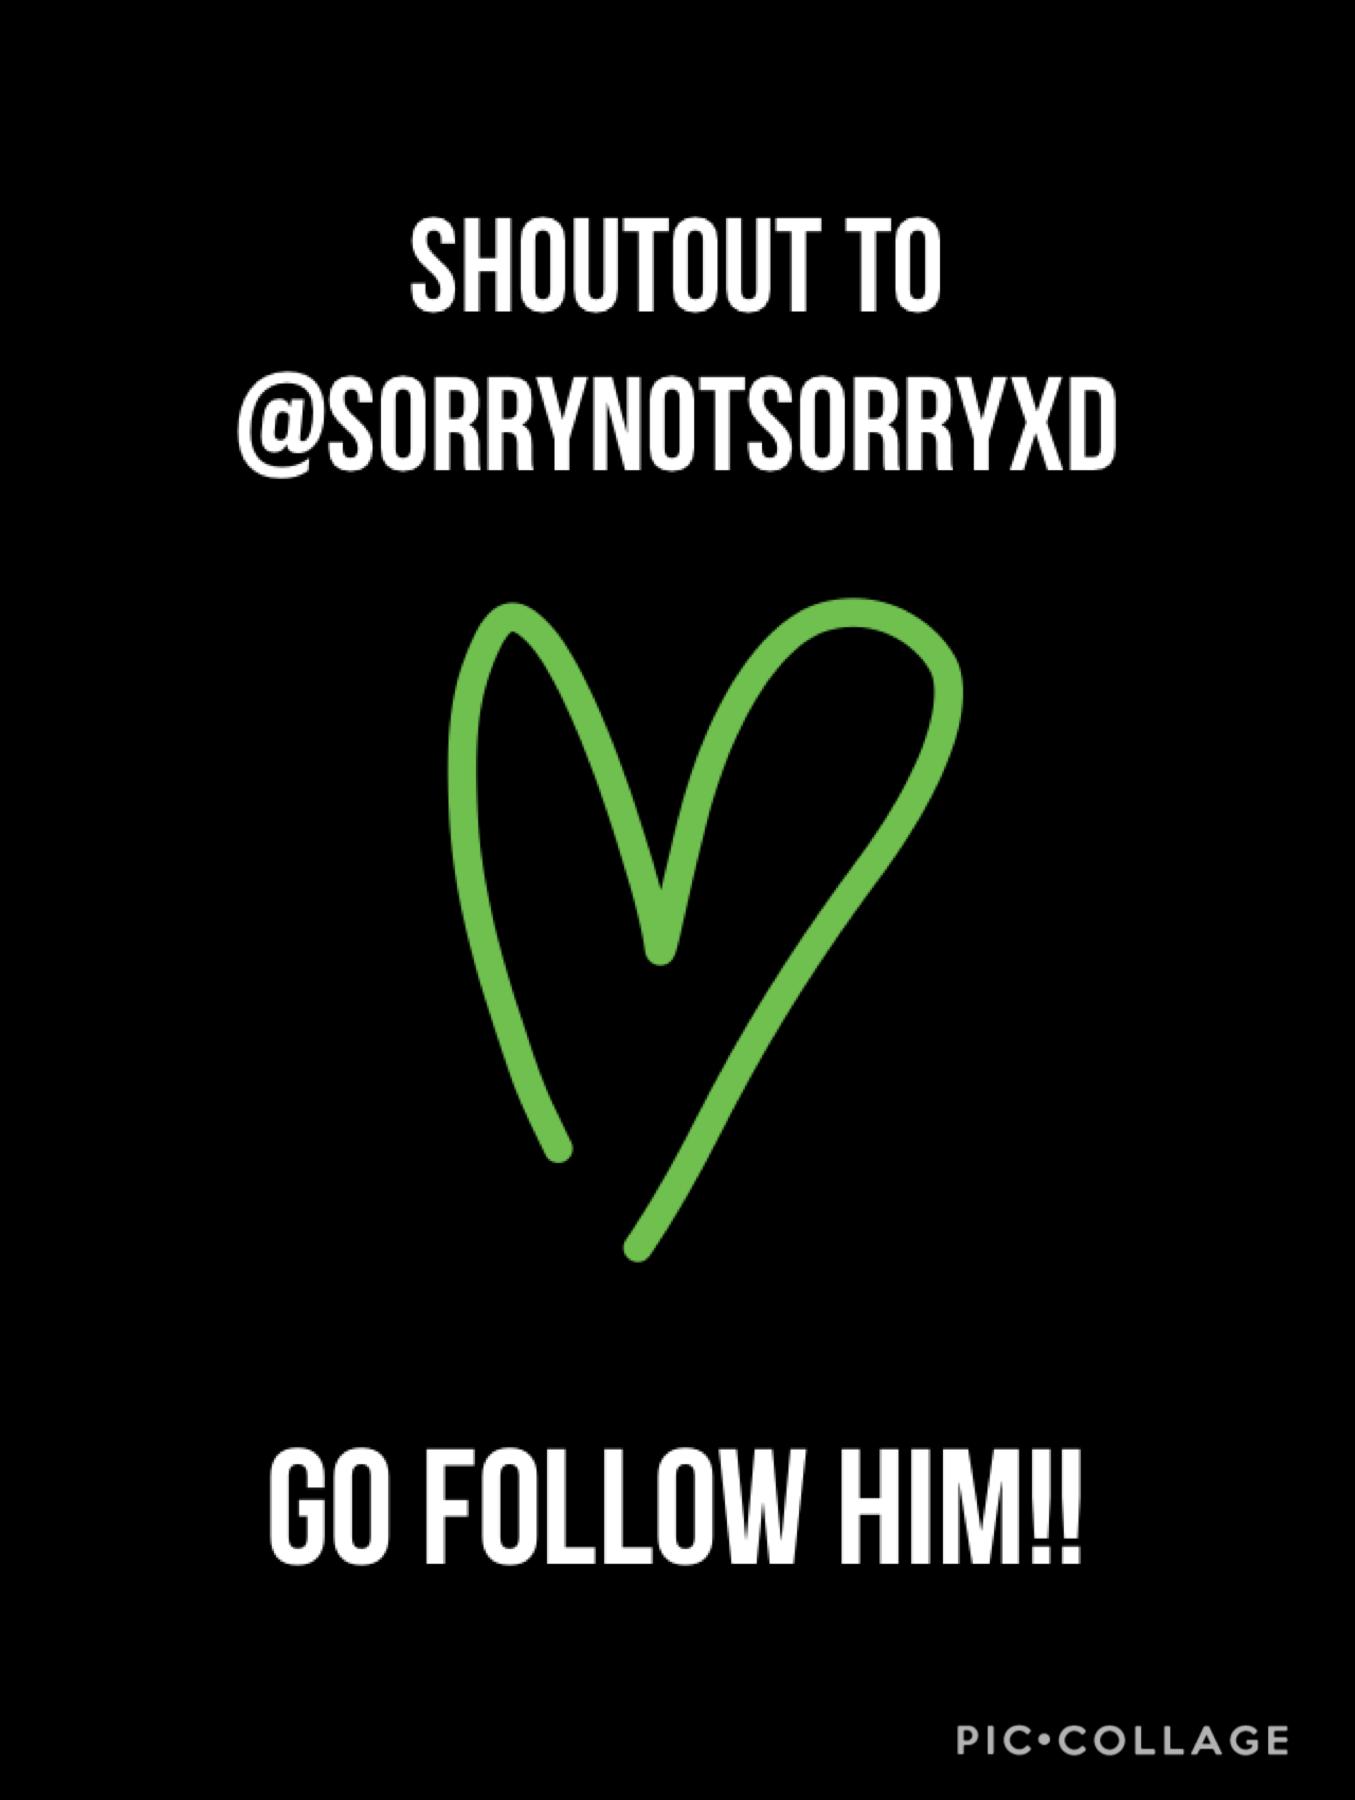 Follow him!!